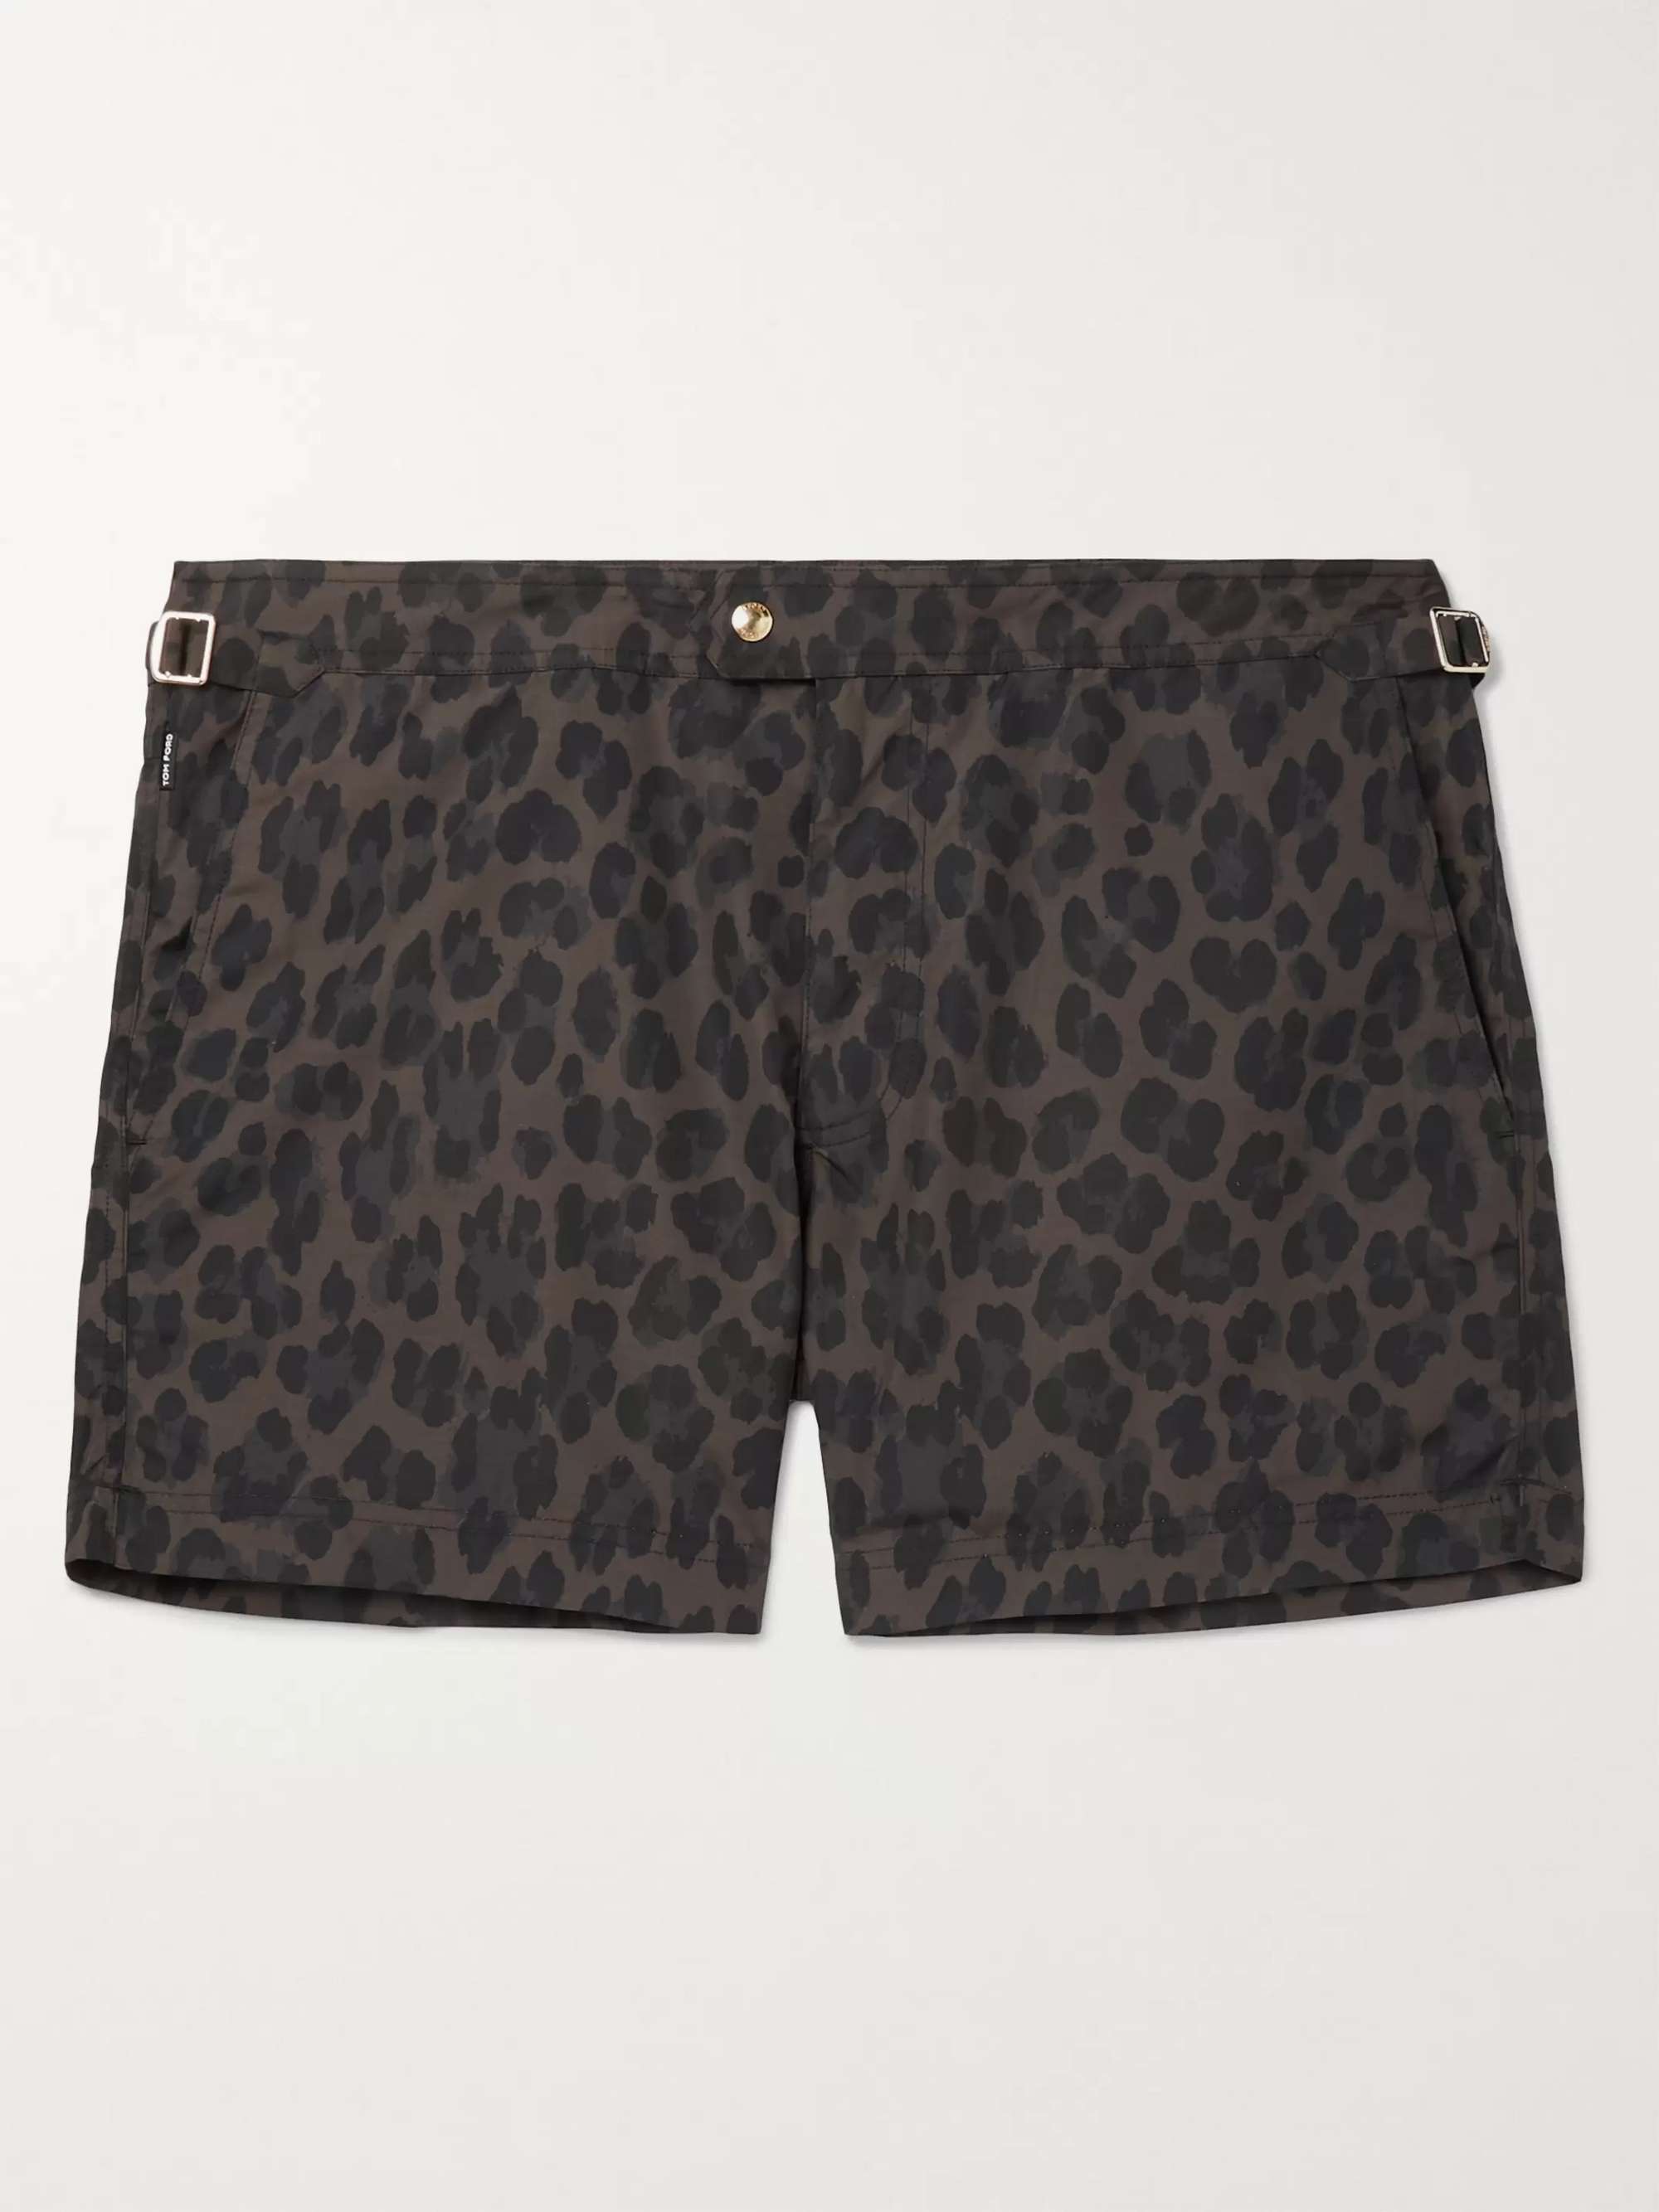 TOM FORD Slim-Fit Short-Length Leopard-Print Swim Shorts